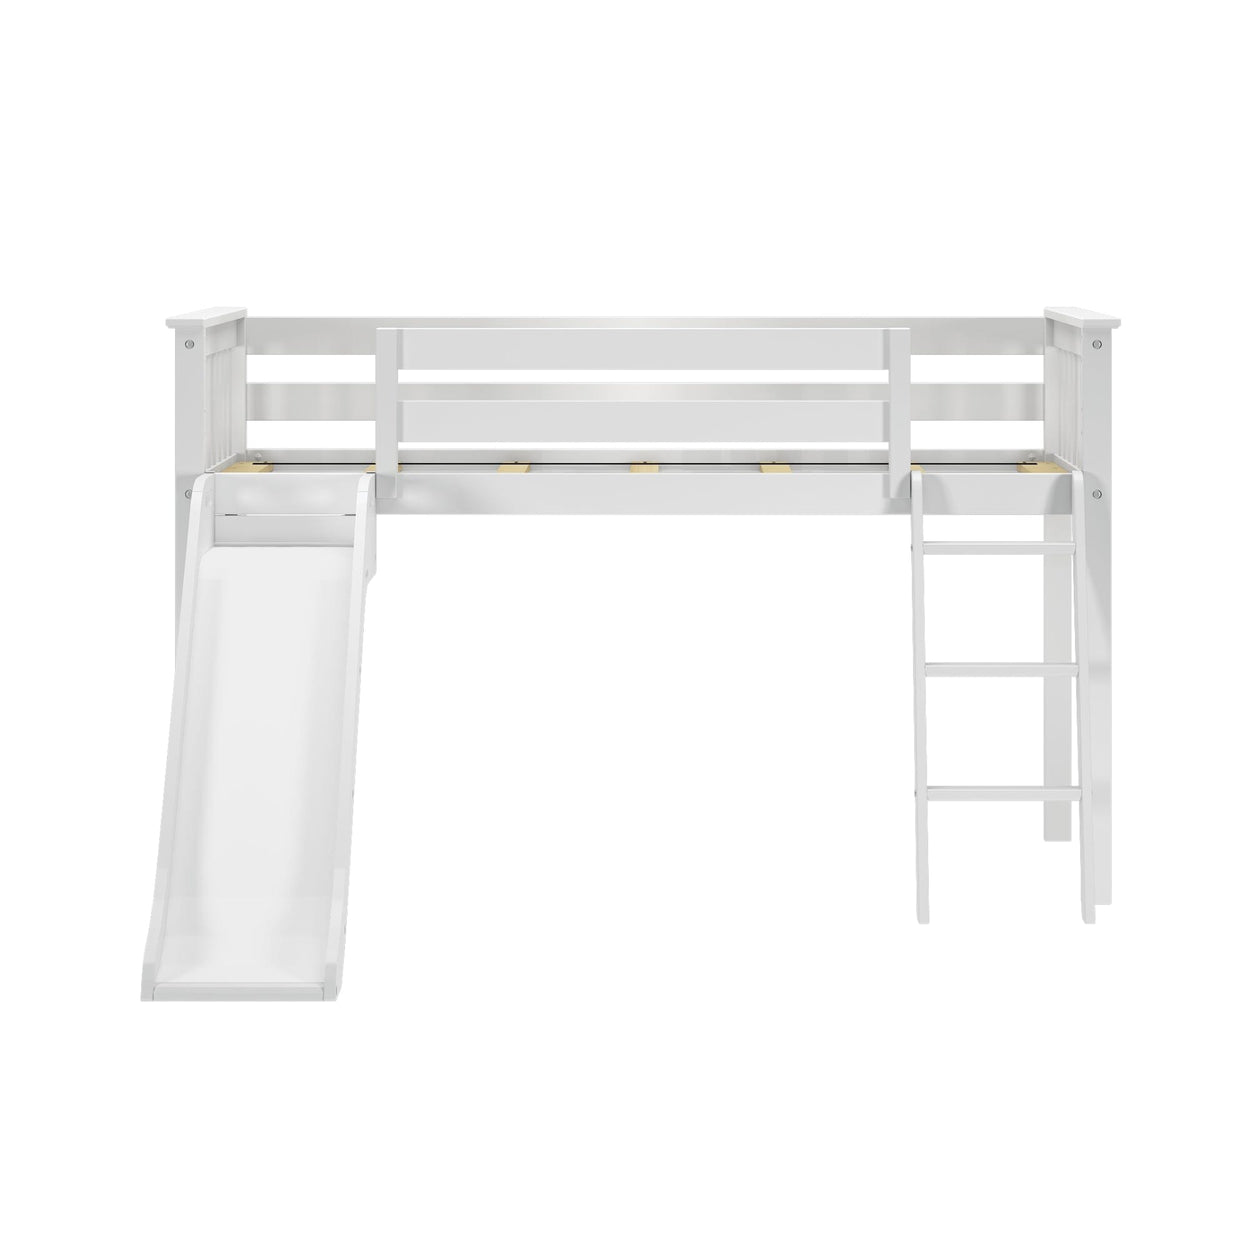 180413002067 : Loft Beds Low Loft with Easy Slide and Orange Camper Van Curtain, White